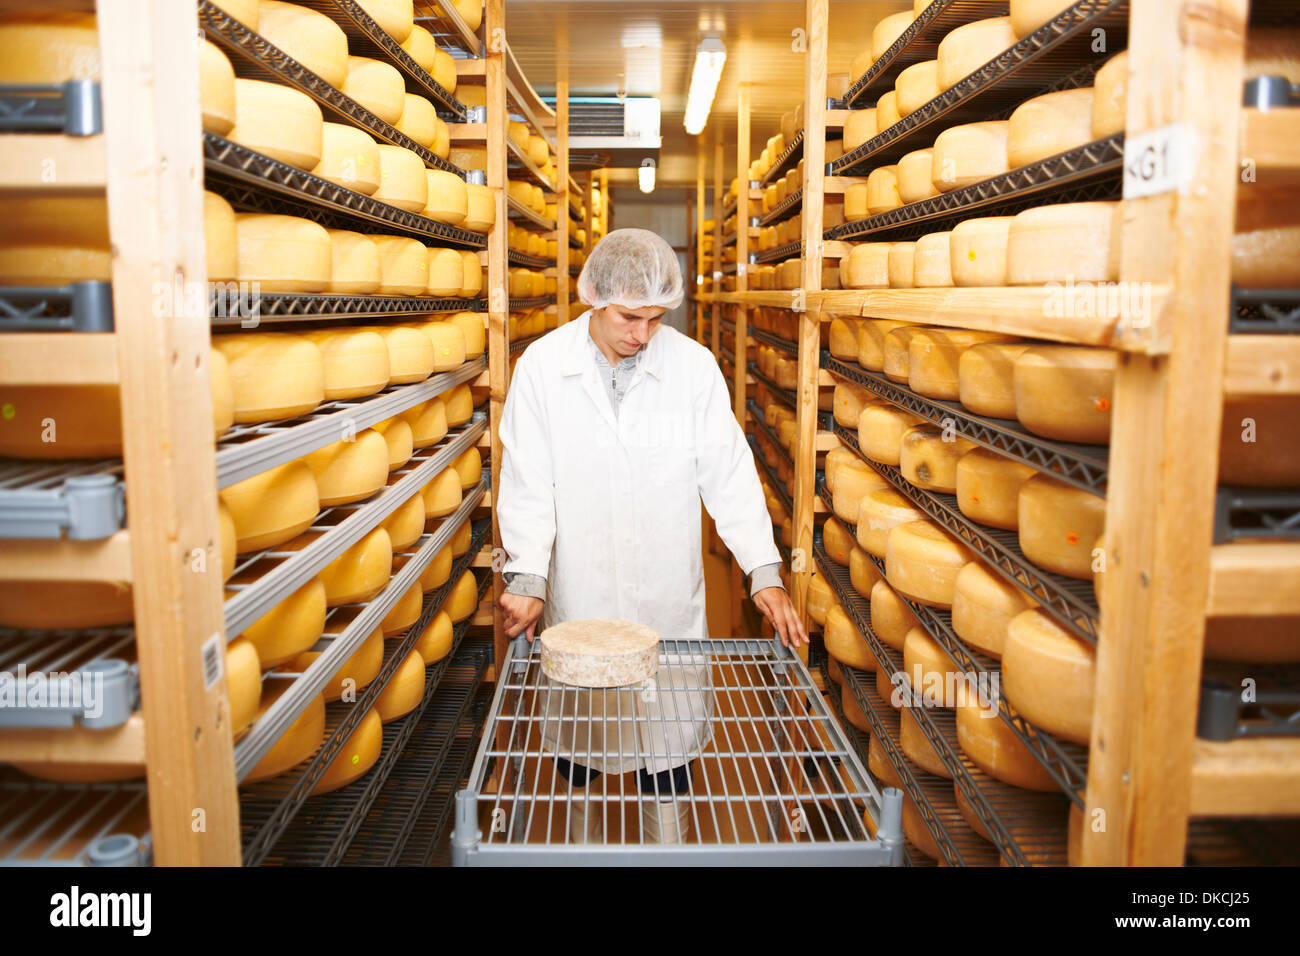 https://c8.alamy.com/comp/DKCJ25/worker-wheeling-cheese-round-for-storage-at-farm-factory-DKCJ25.jpg